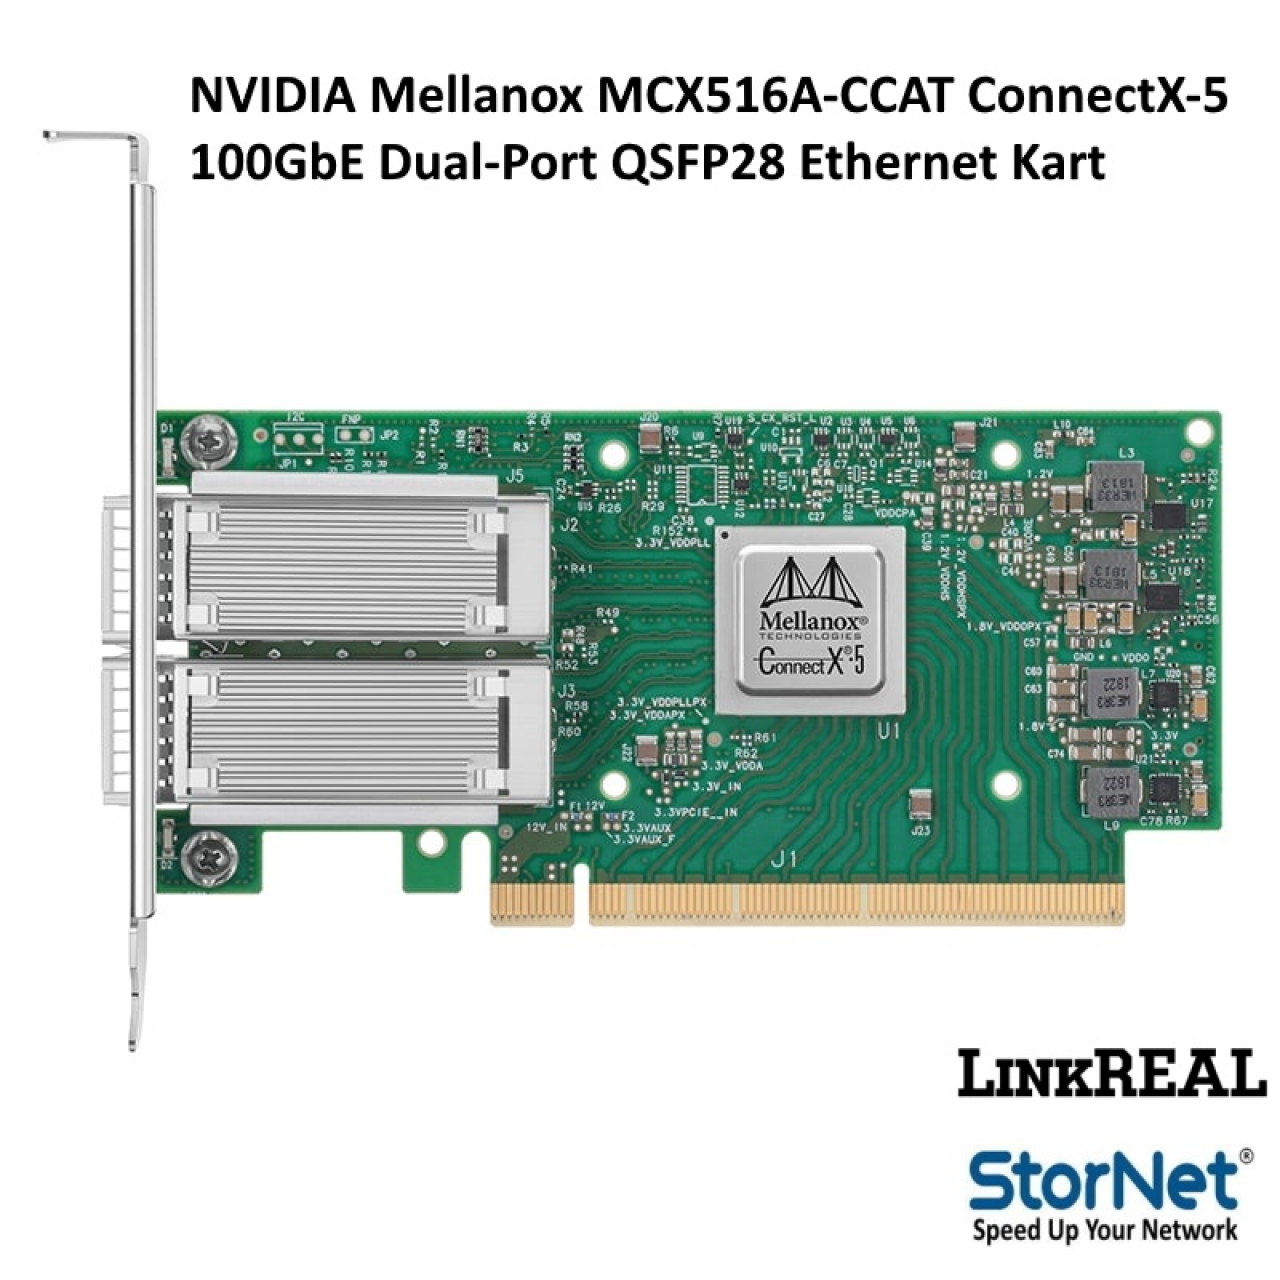 Ethernet Kartı NVIDIA Mellanox MCX516A-CCAT ConnectX-5 EN 100GbE Dual-Port QSFP28